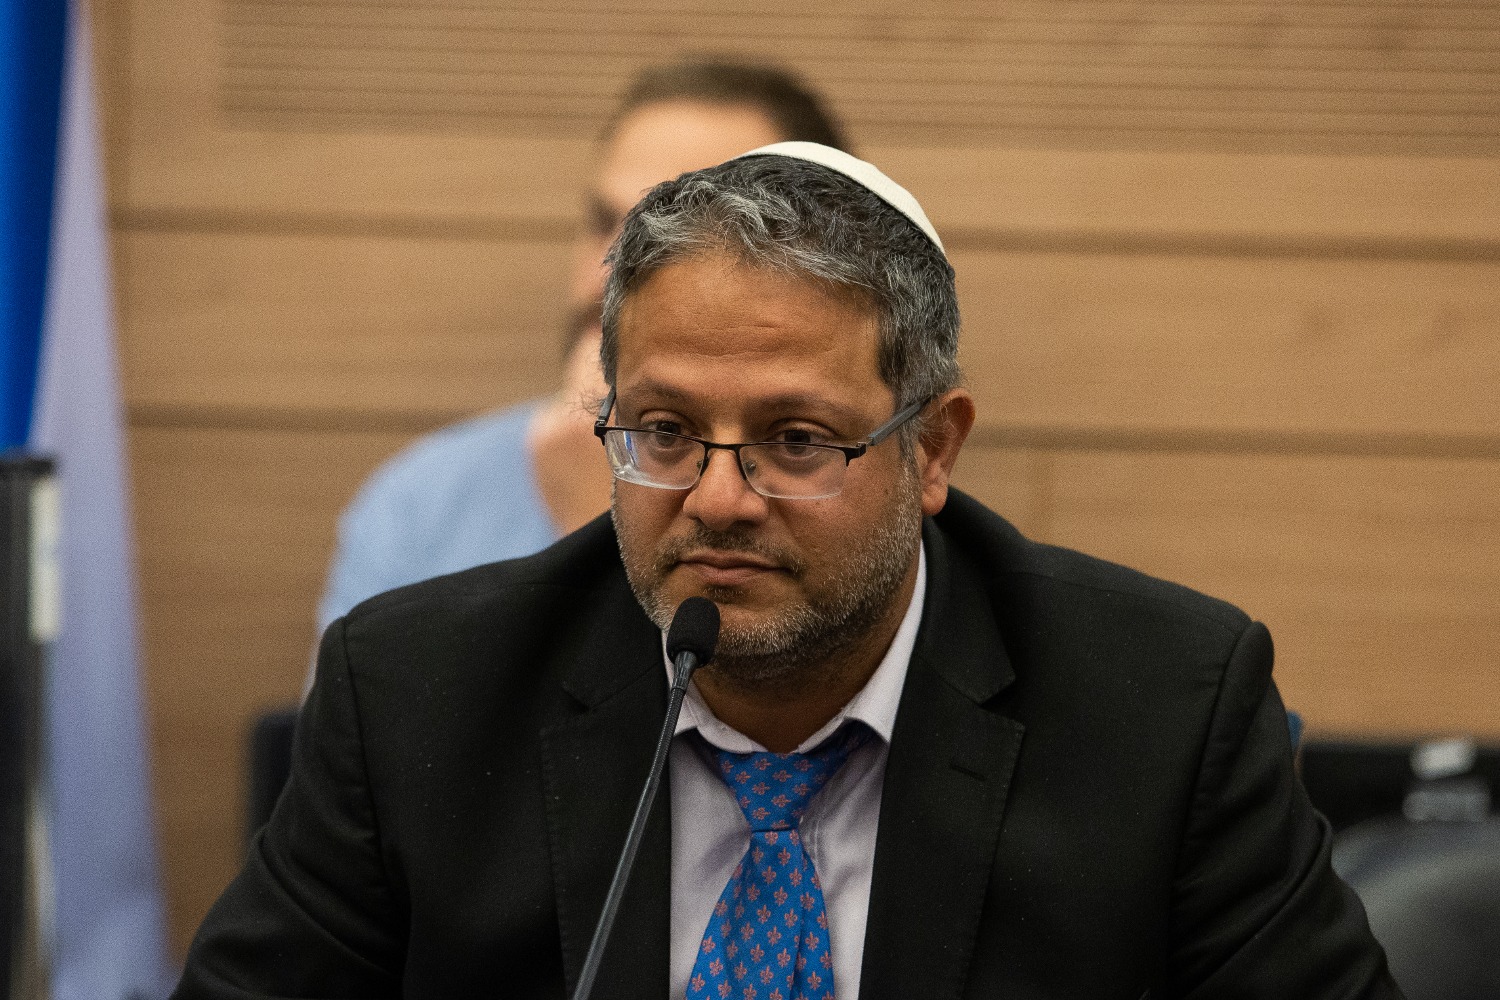 Министр нацбезопасности Израиля попал в аварию 